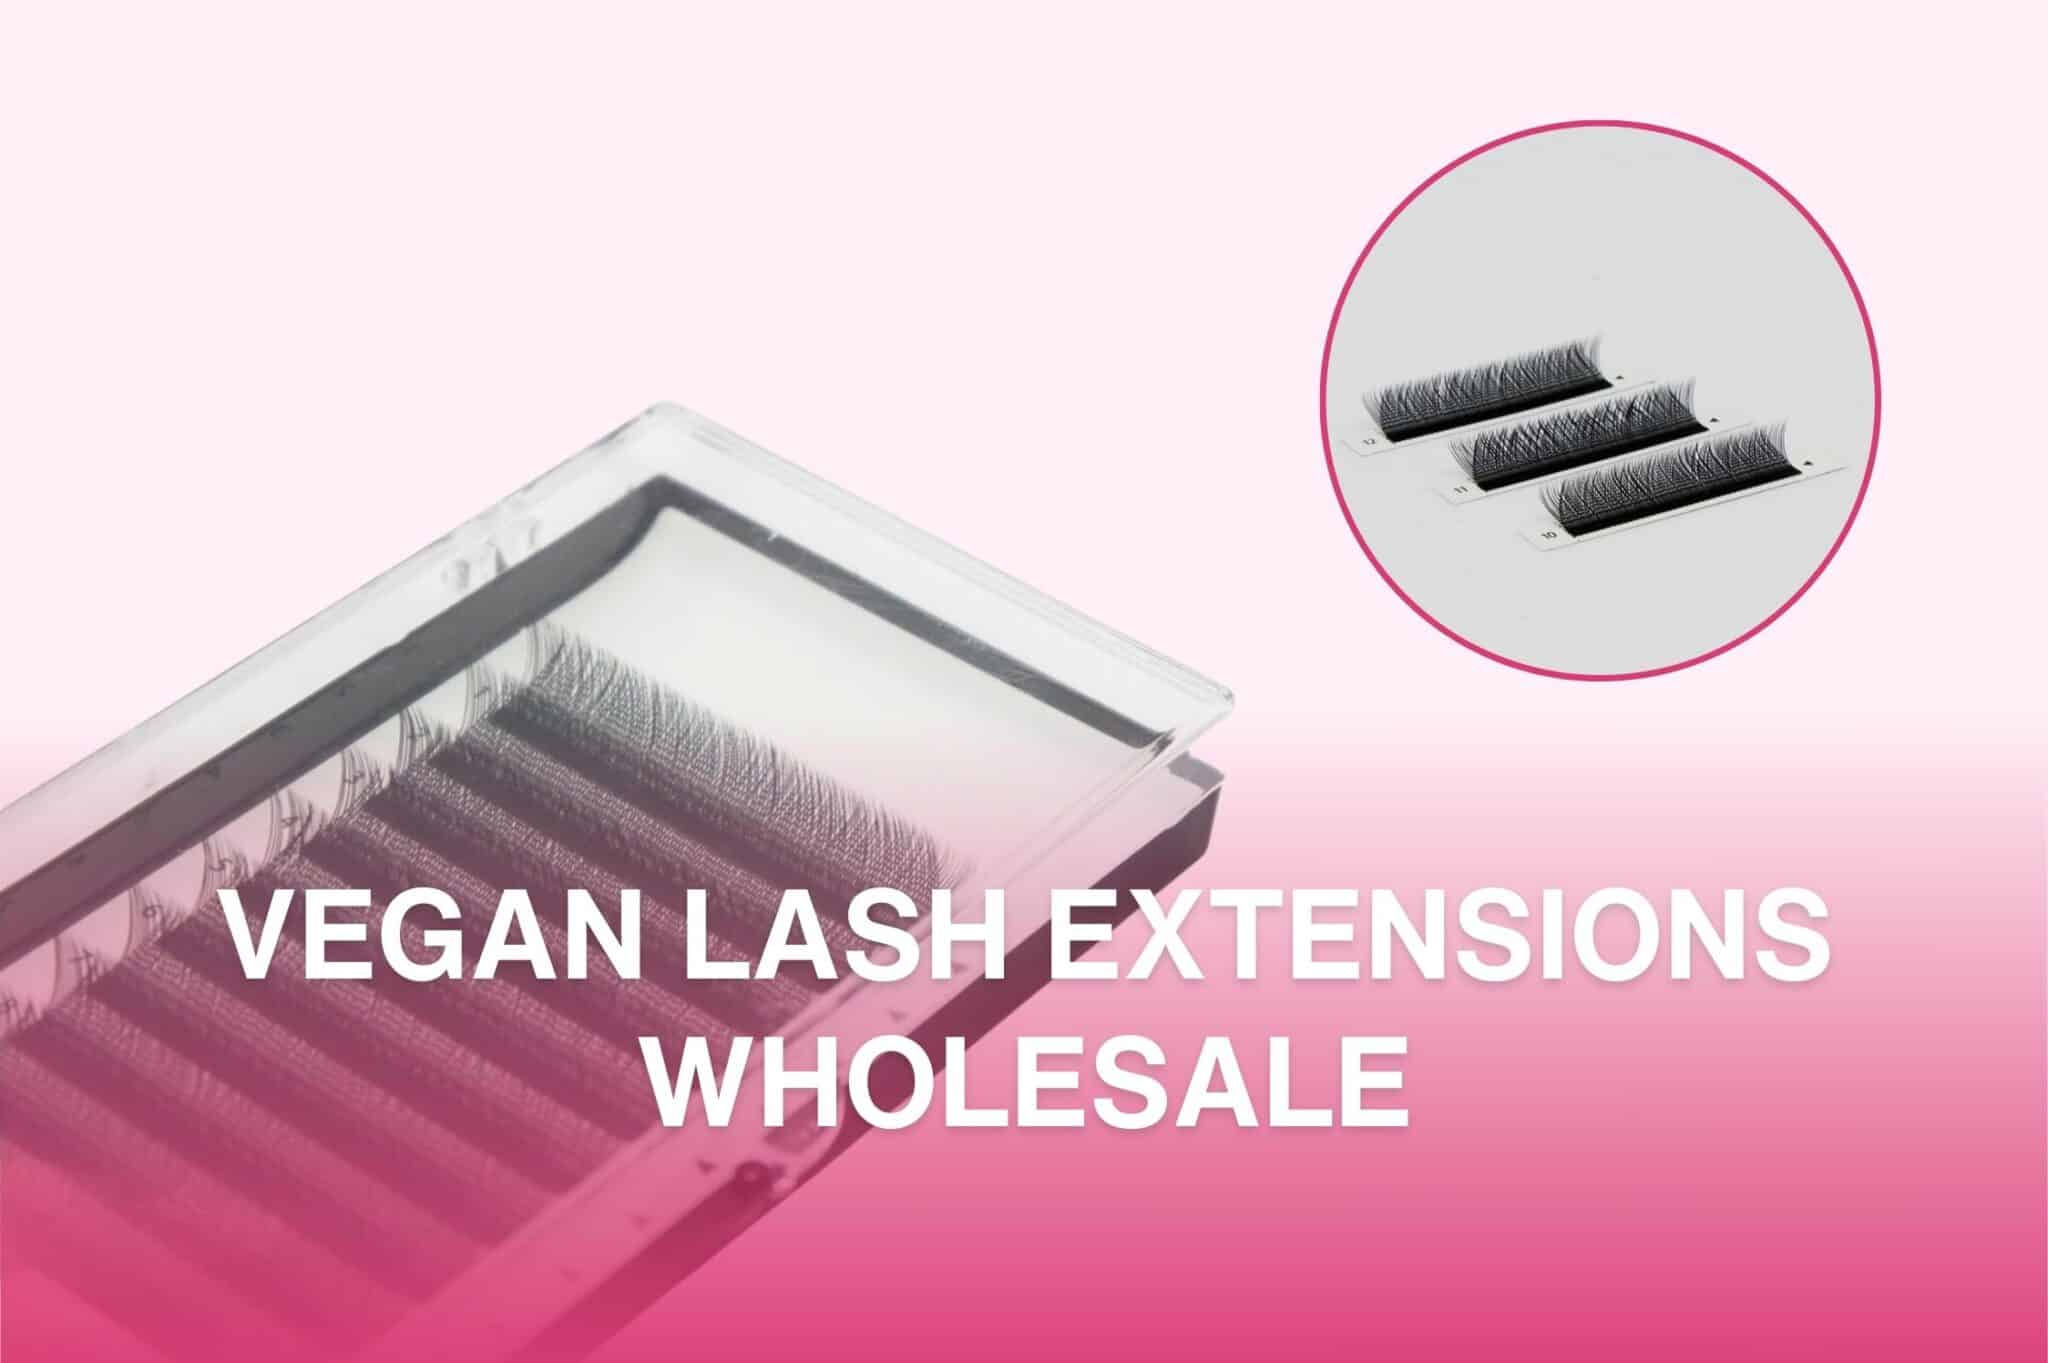 Vegan Lash Extensions Wholesale tag